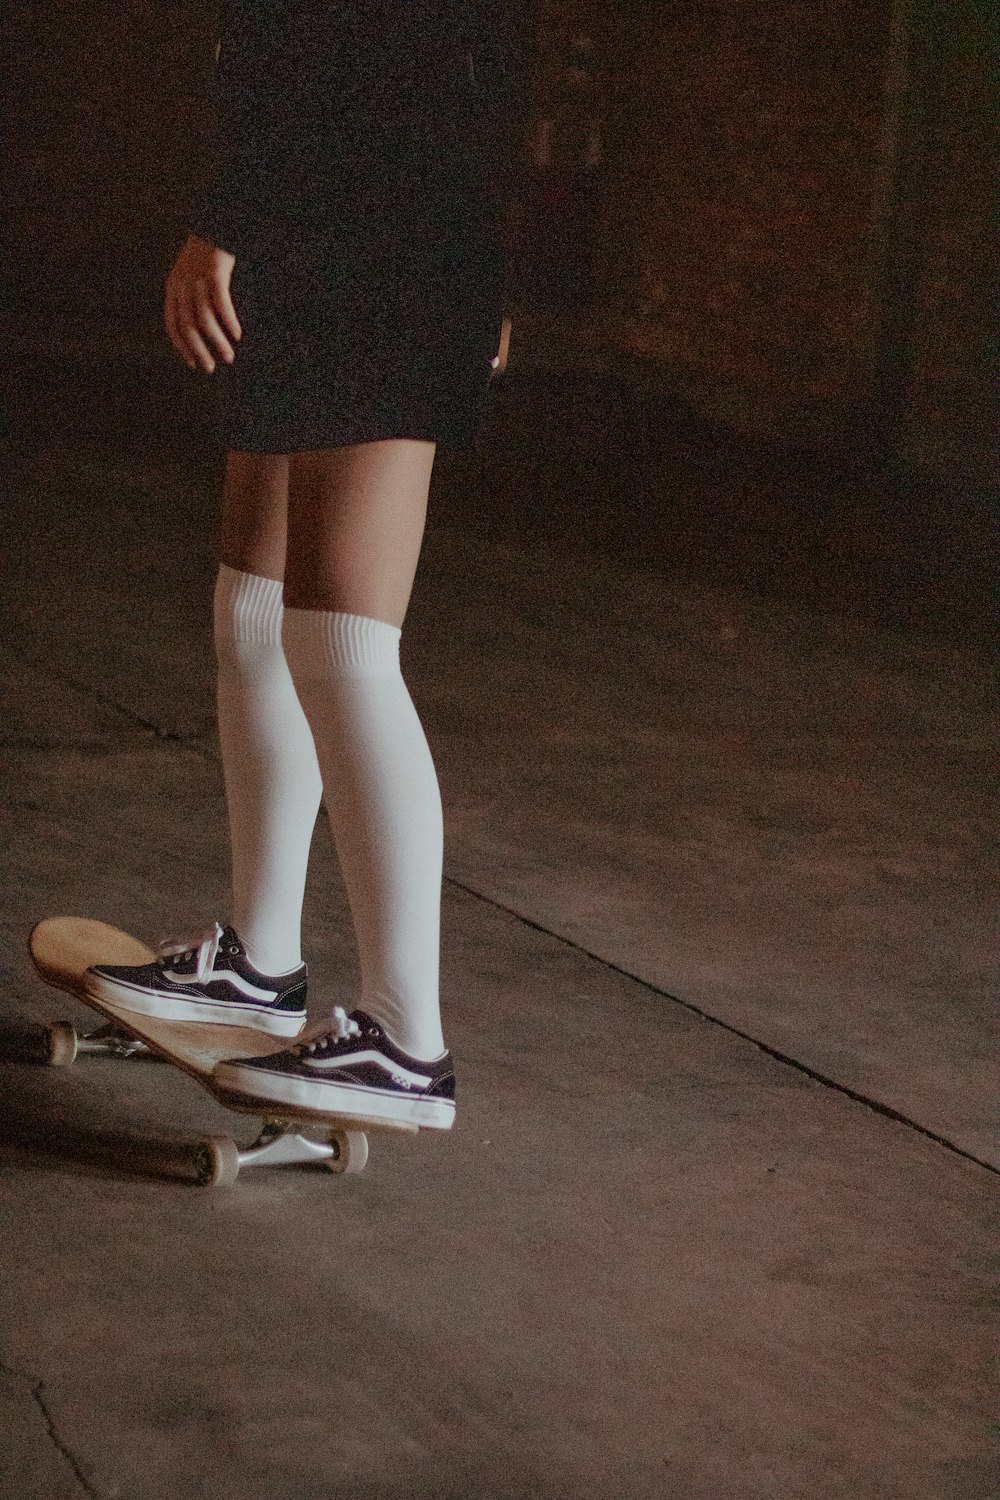 a person riding a skateboard in a dark room